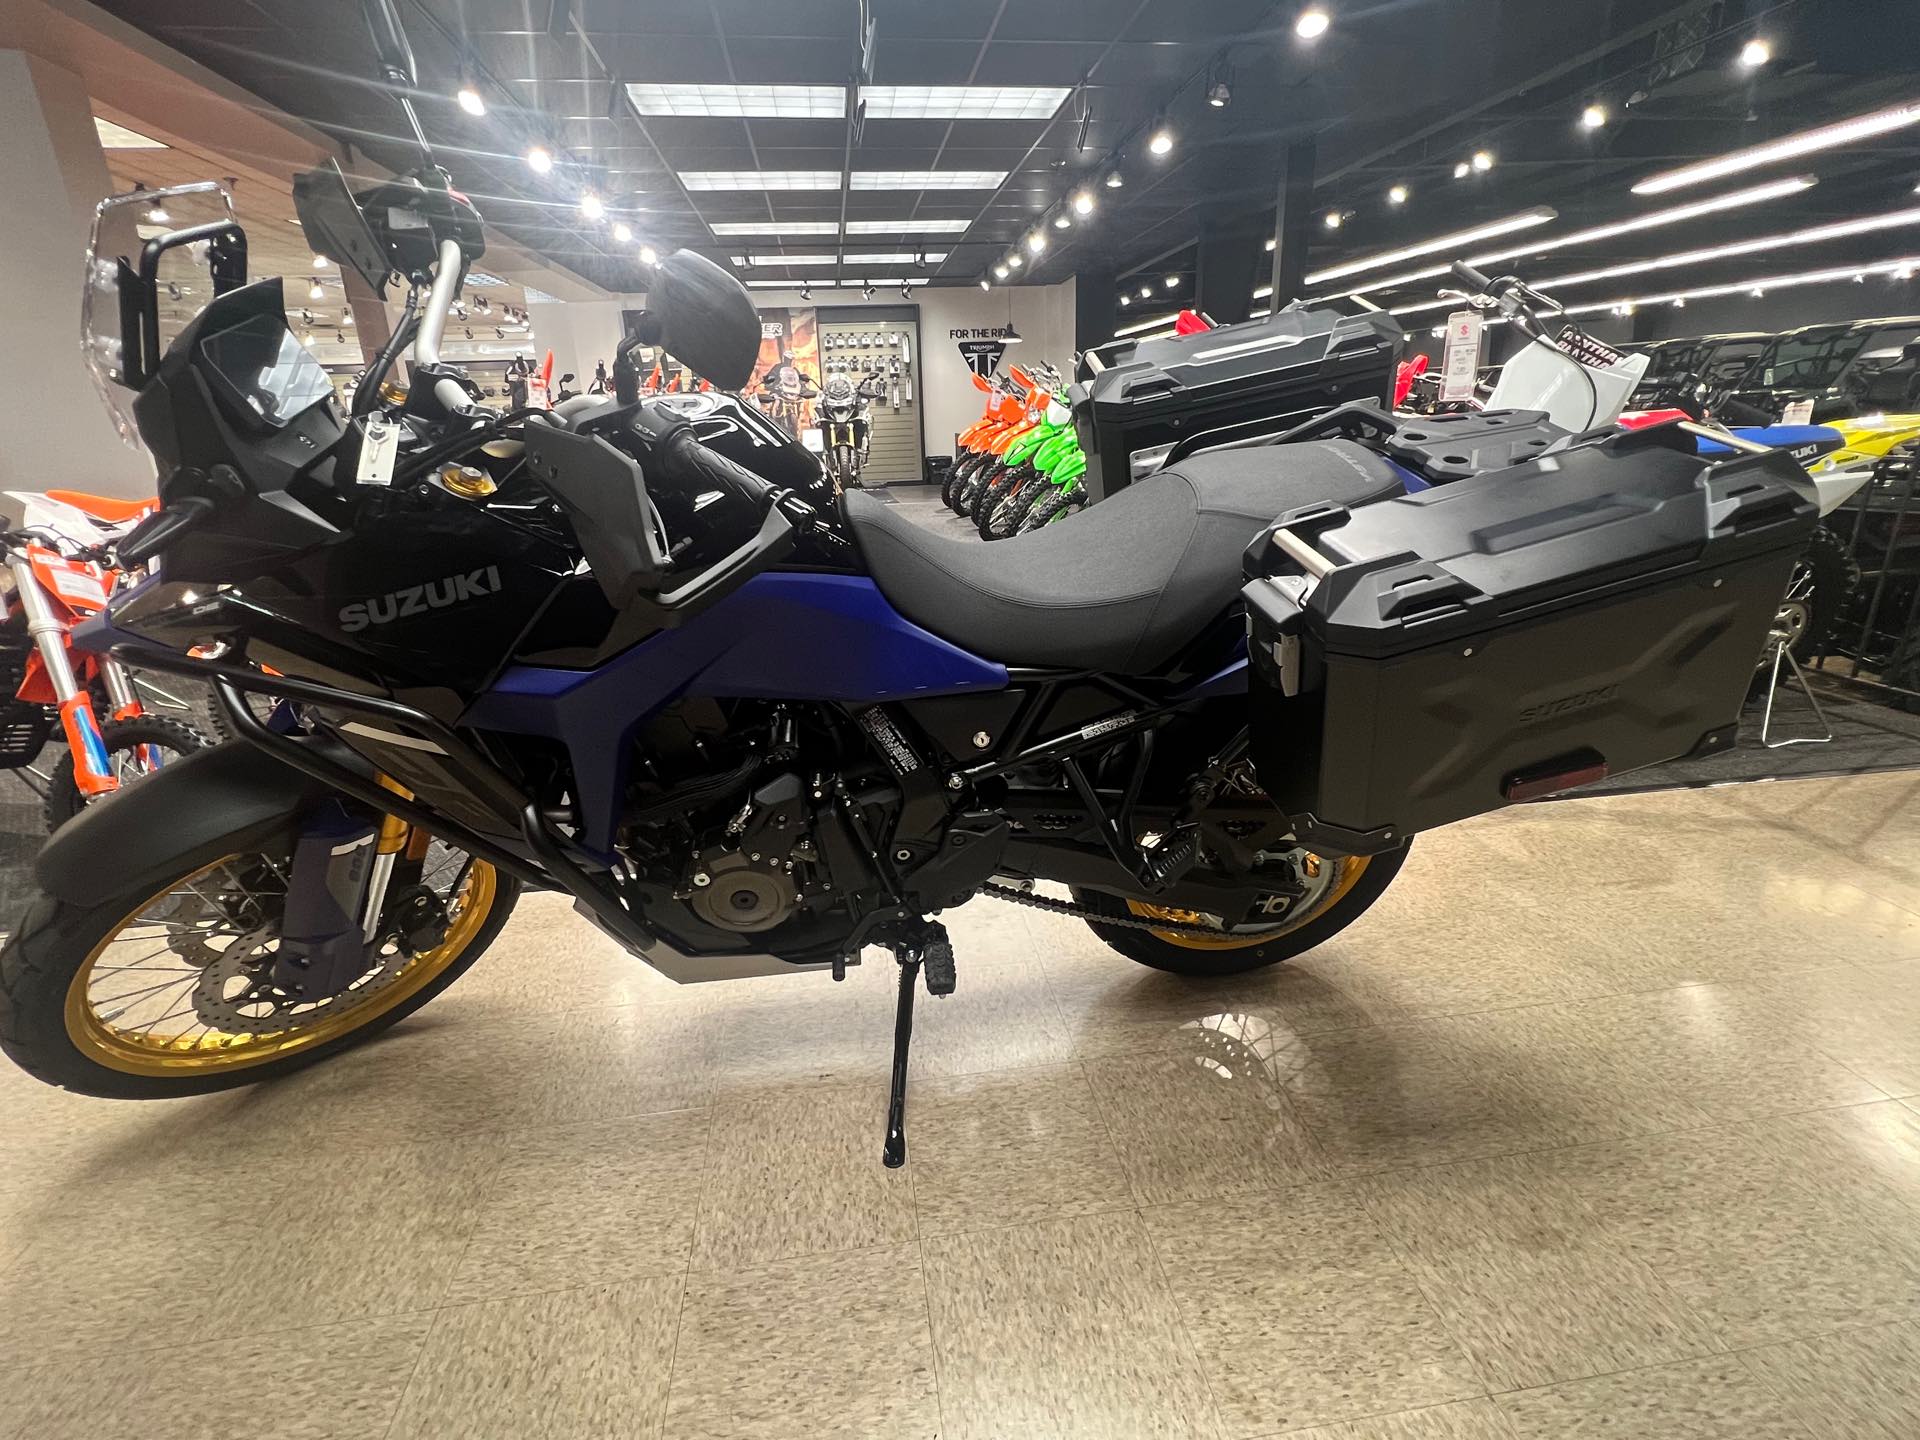 2023 Suzuki V-Strom 800DE at Sloans Motorcycle ATV, Murfreesboro, TN, 37129